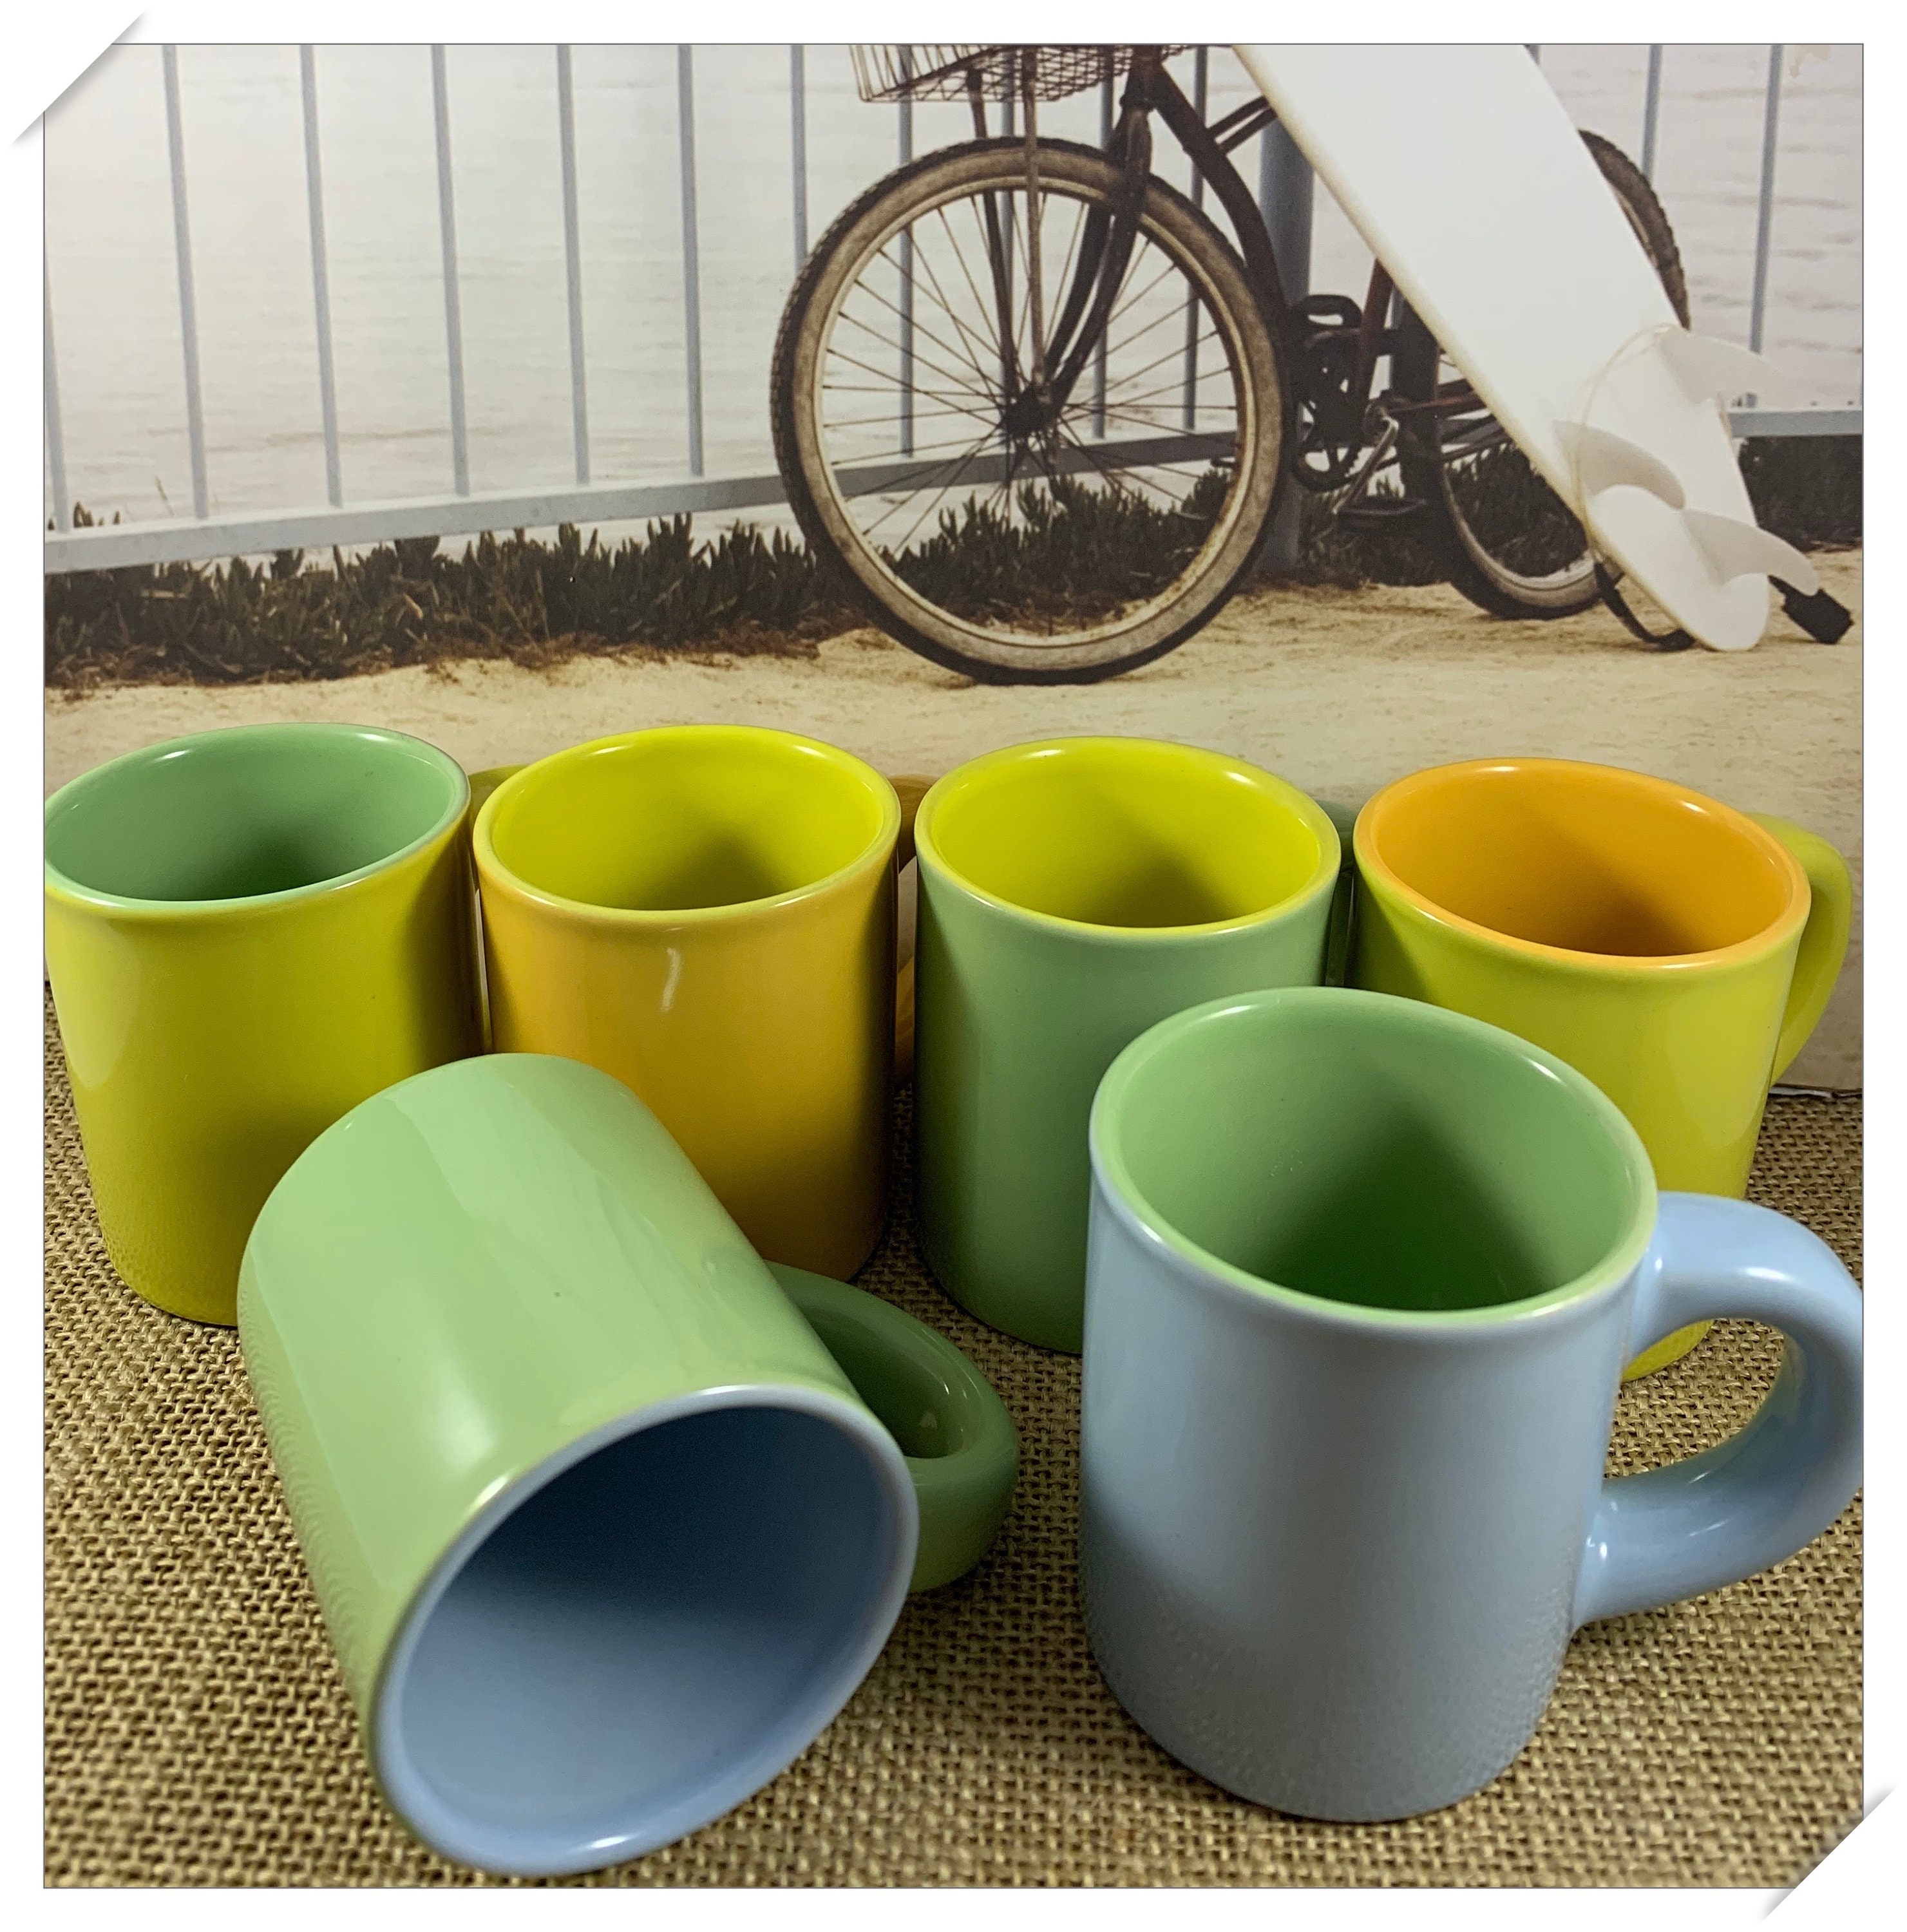 Espresso Cups Set of 4 2.44 Oz/ 70ml Cool Bicolor Pastel Colors